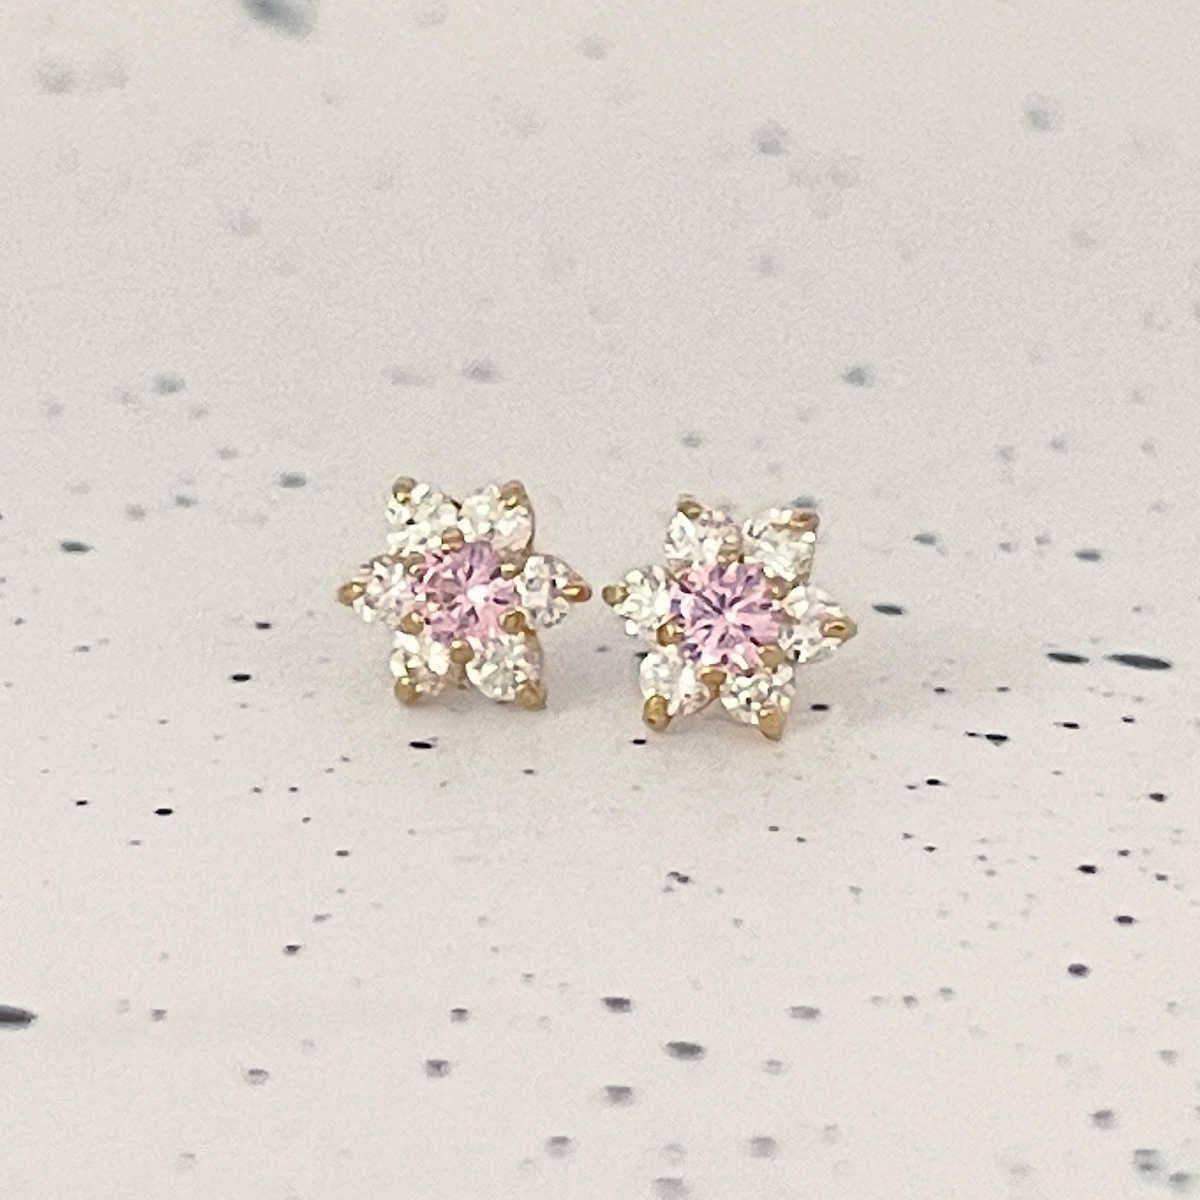 Pink Gemstone Flower Screw Back Stud Earrings | 14K Gold